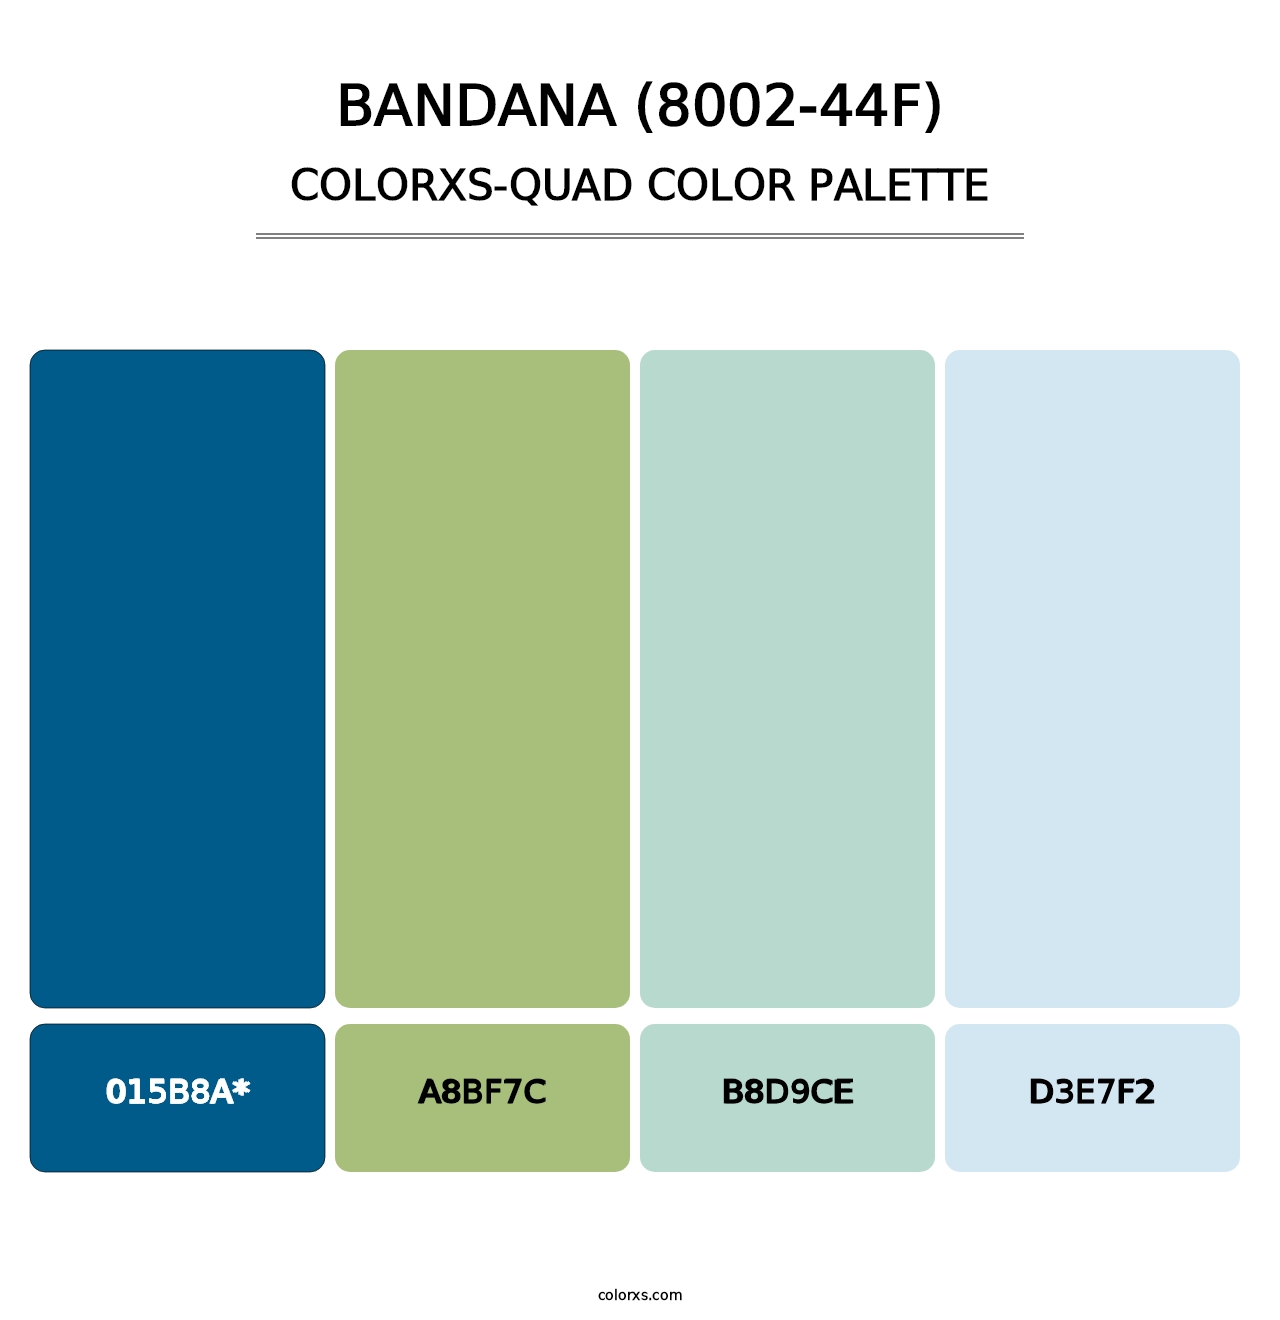 Bandana (8002-44F) - Colorxs Quad Palette